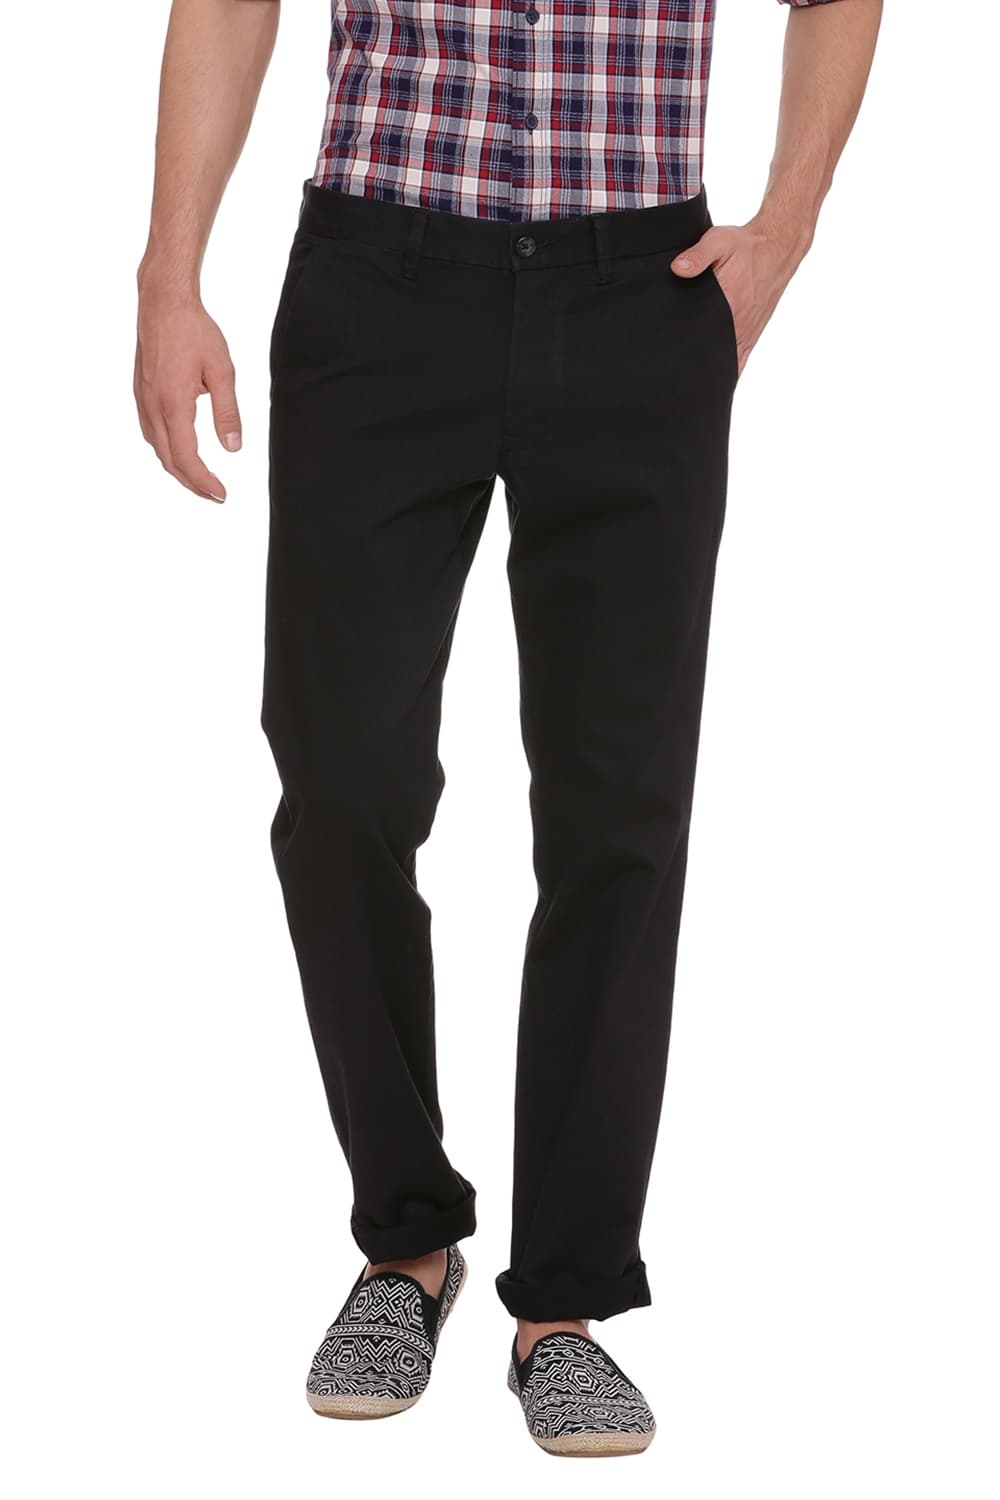 Basics | Basics Tapered Fit Jet Black Stretch Trouser